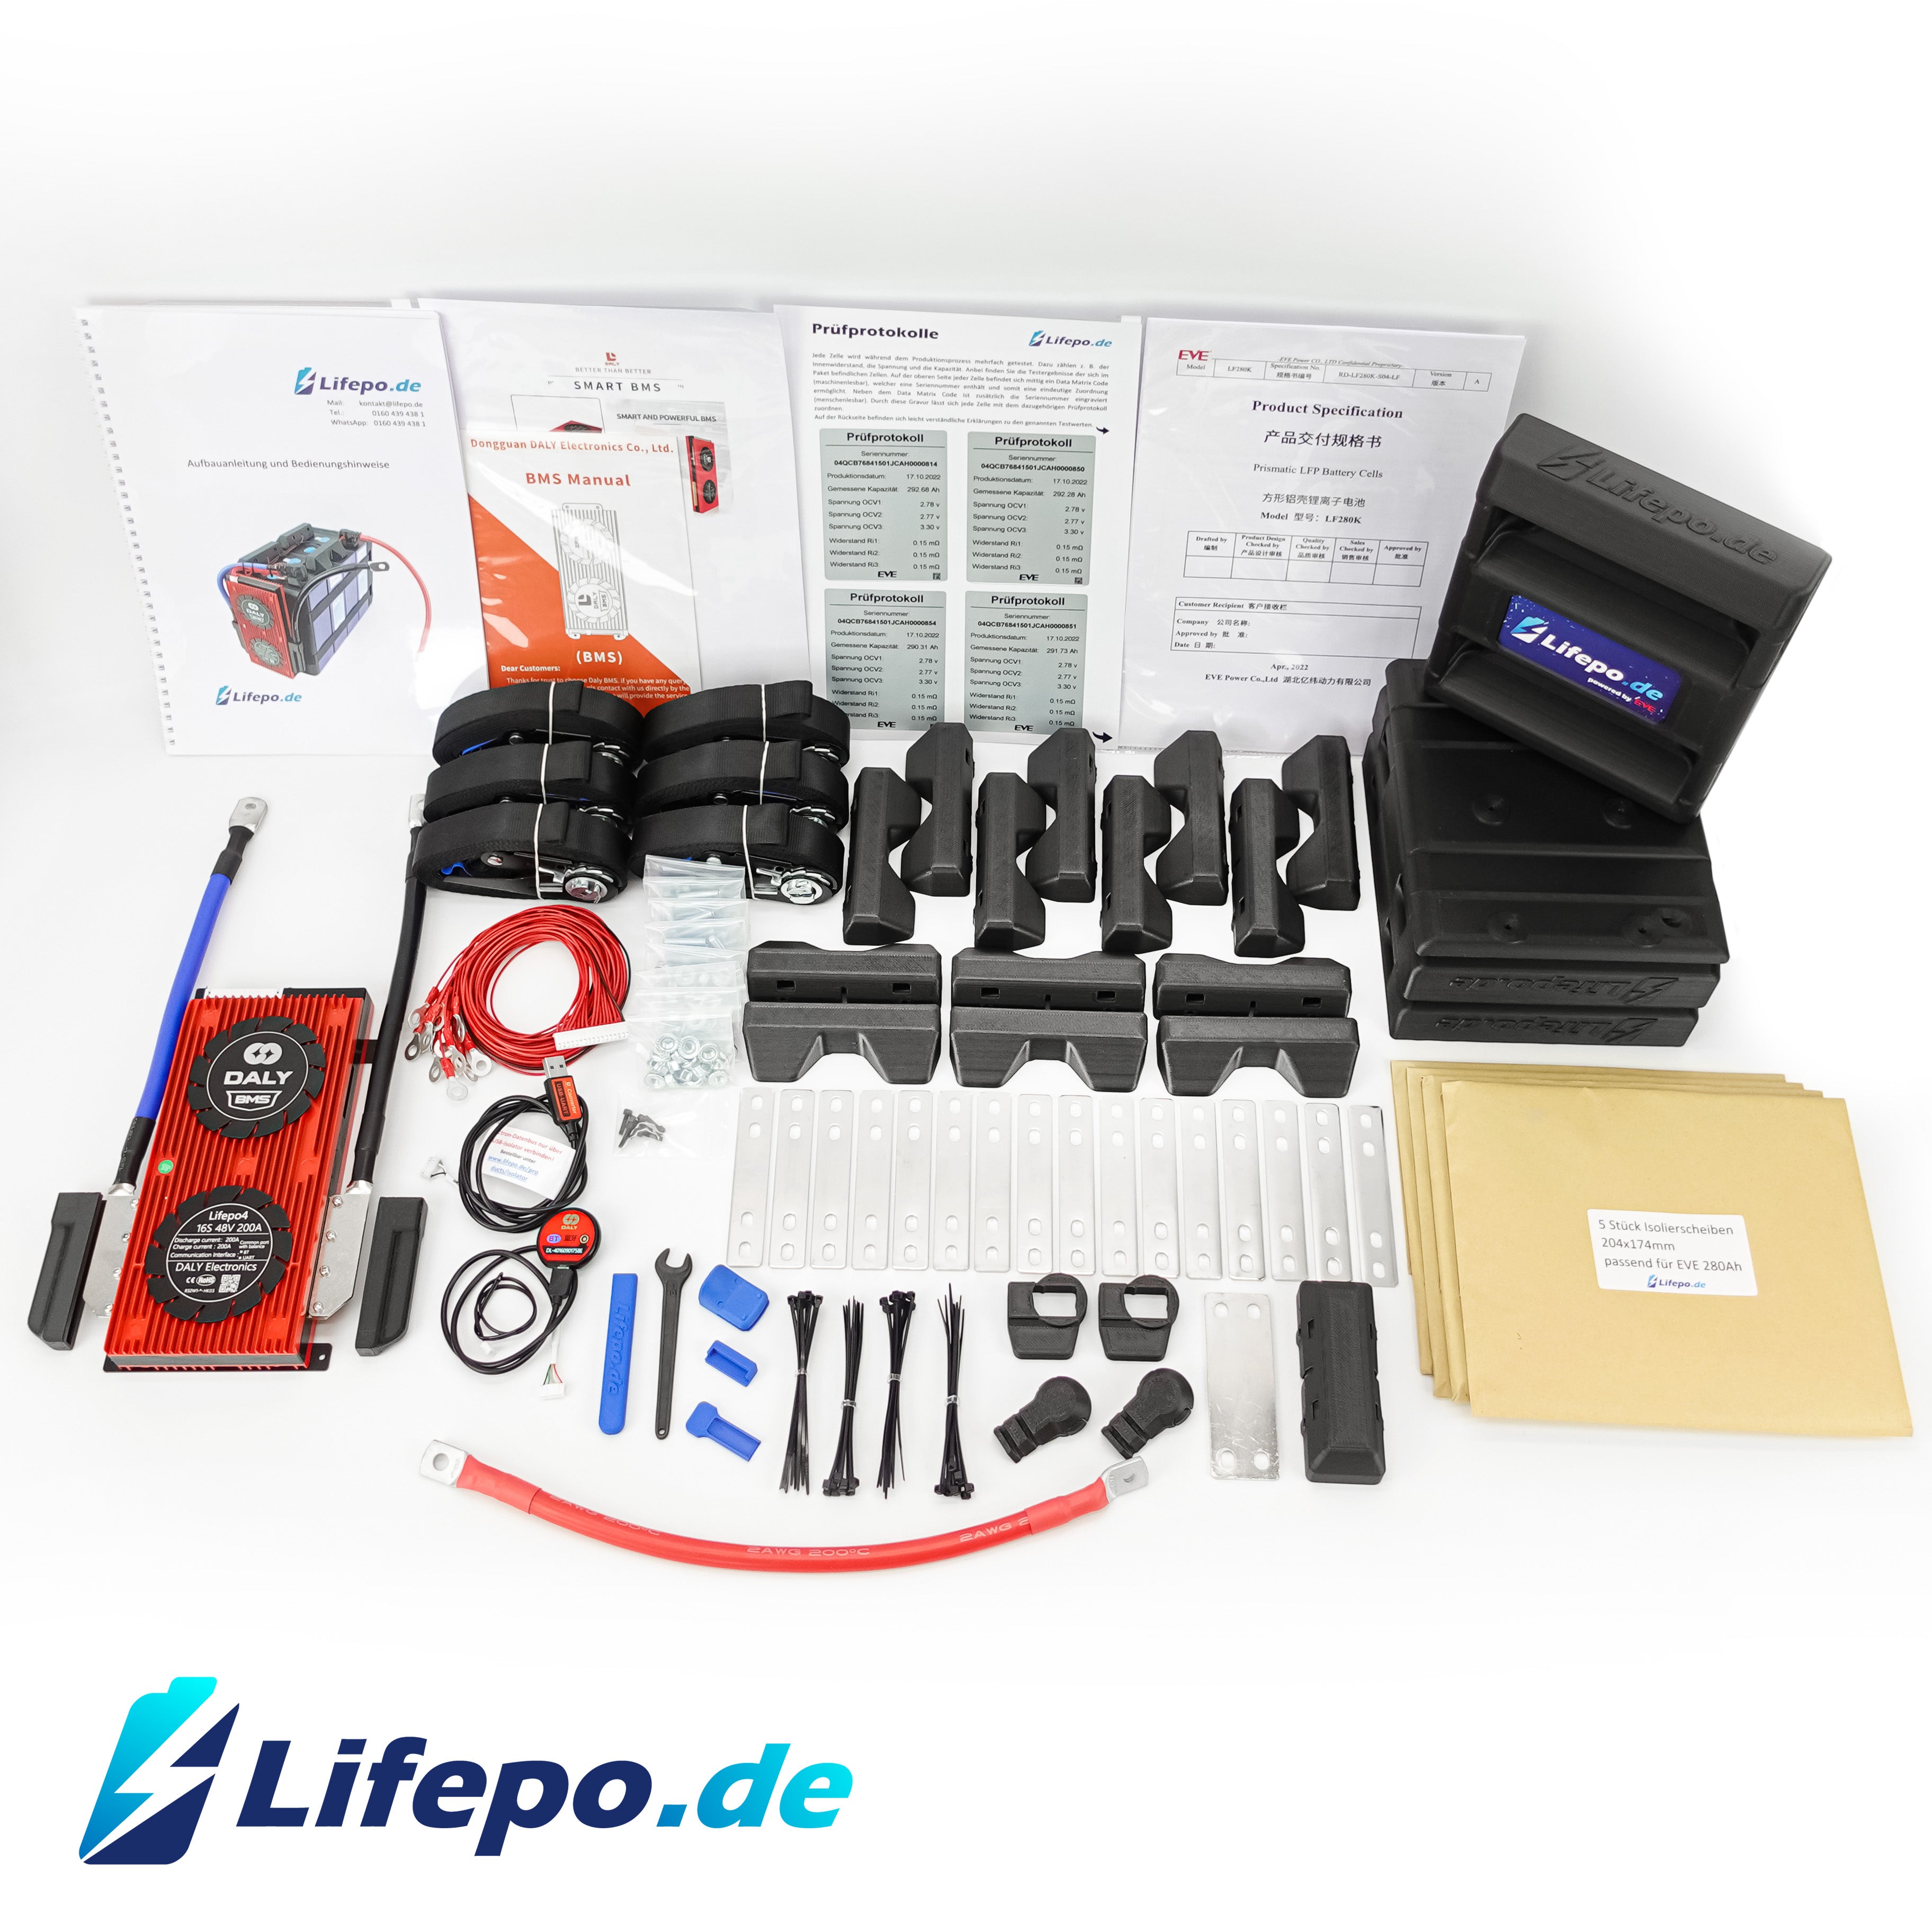 12v 560Ah Lifepo4 Batteriesystem mit EVE Grade A+ 8kWh - zweireihig – Lifepo .de